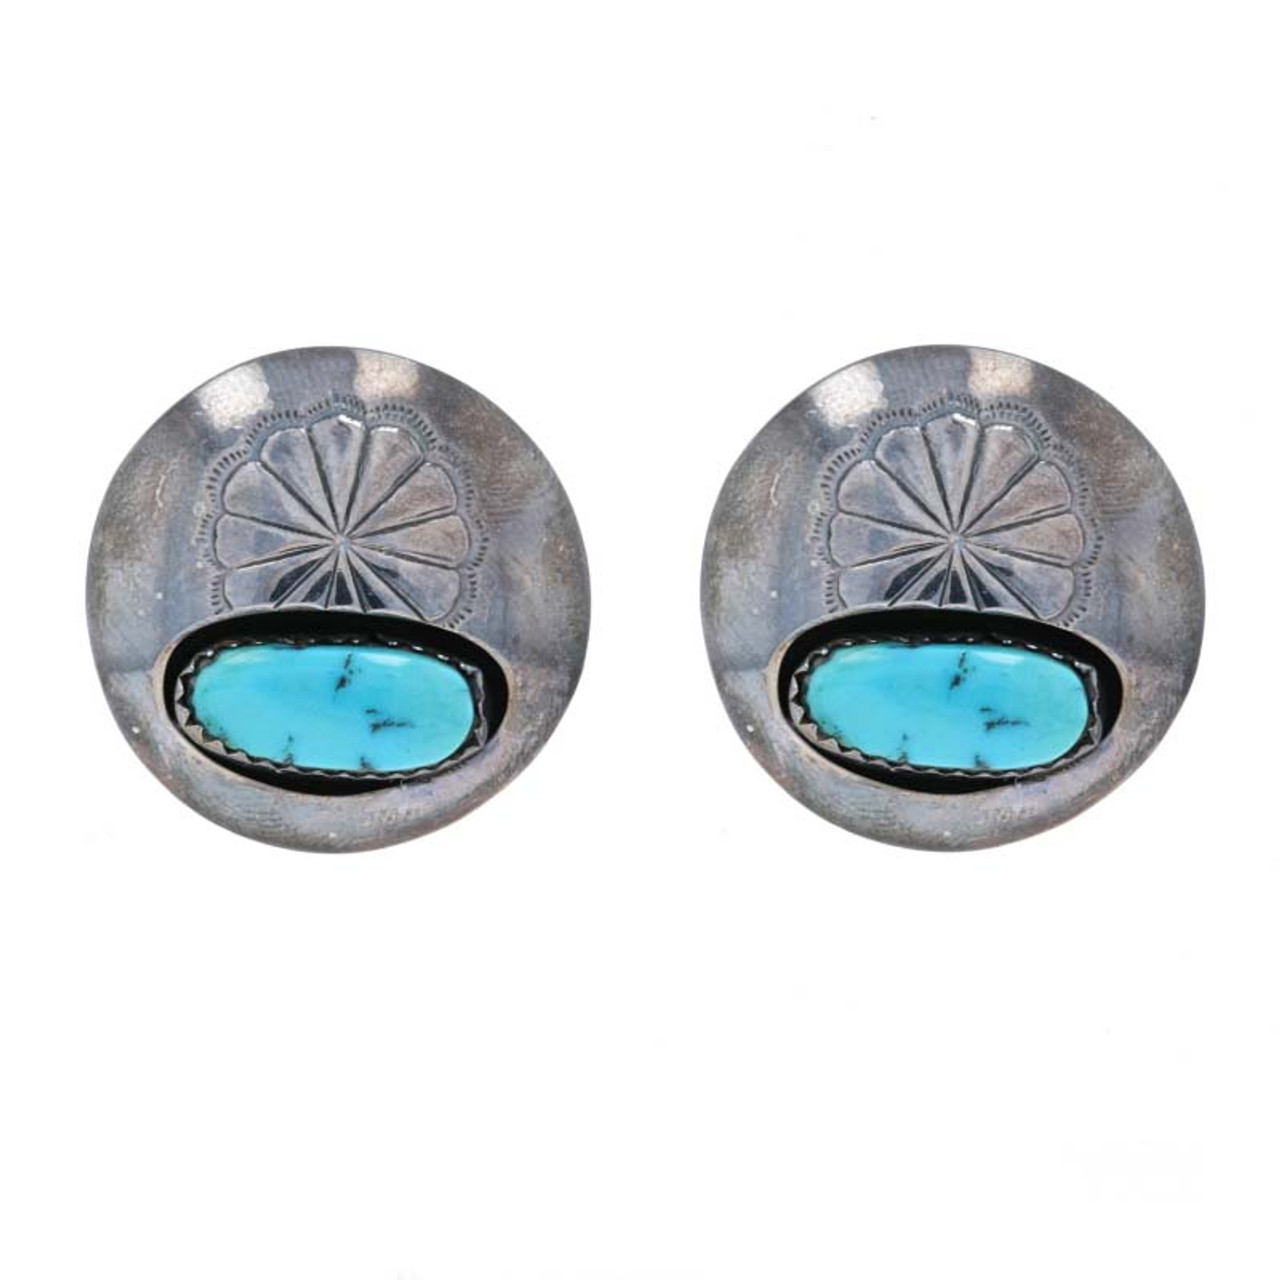 Western Silver Tone Faux Turquoise Large Earrings | eBay